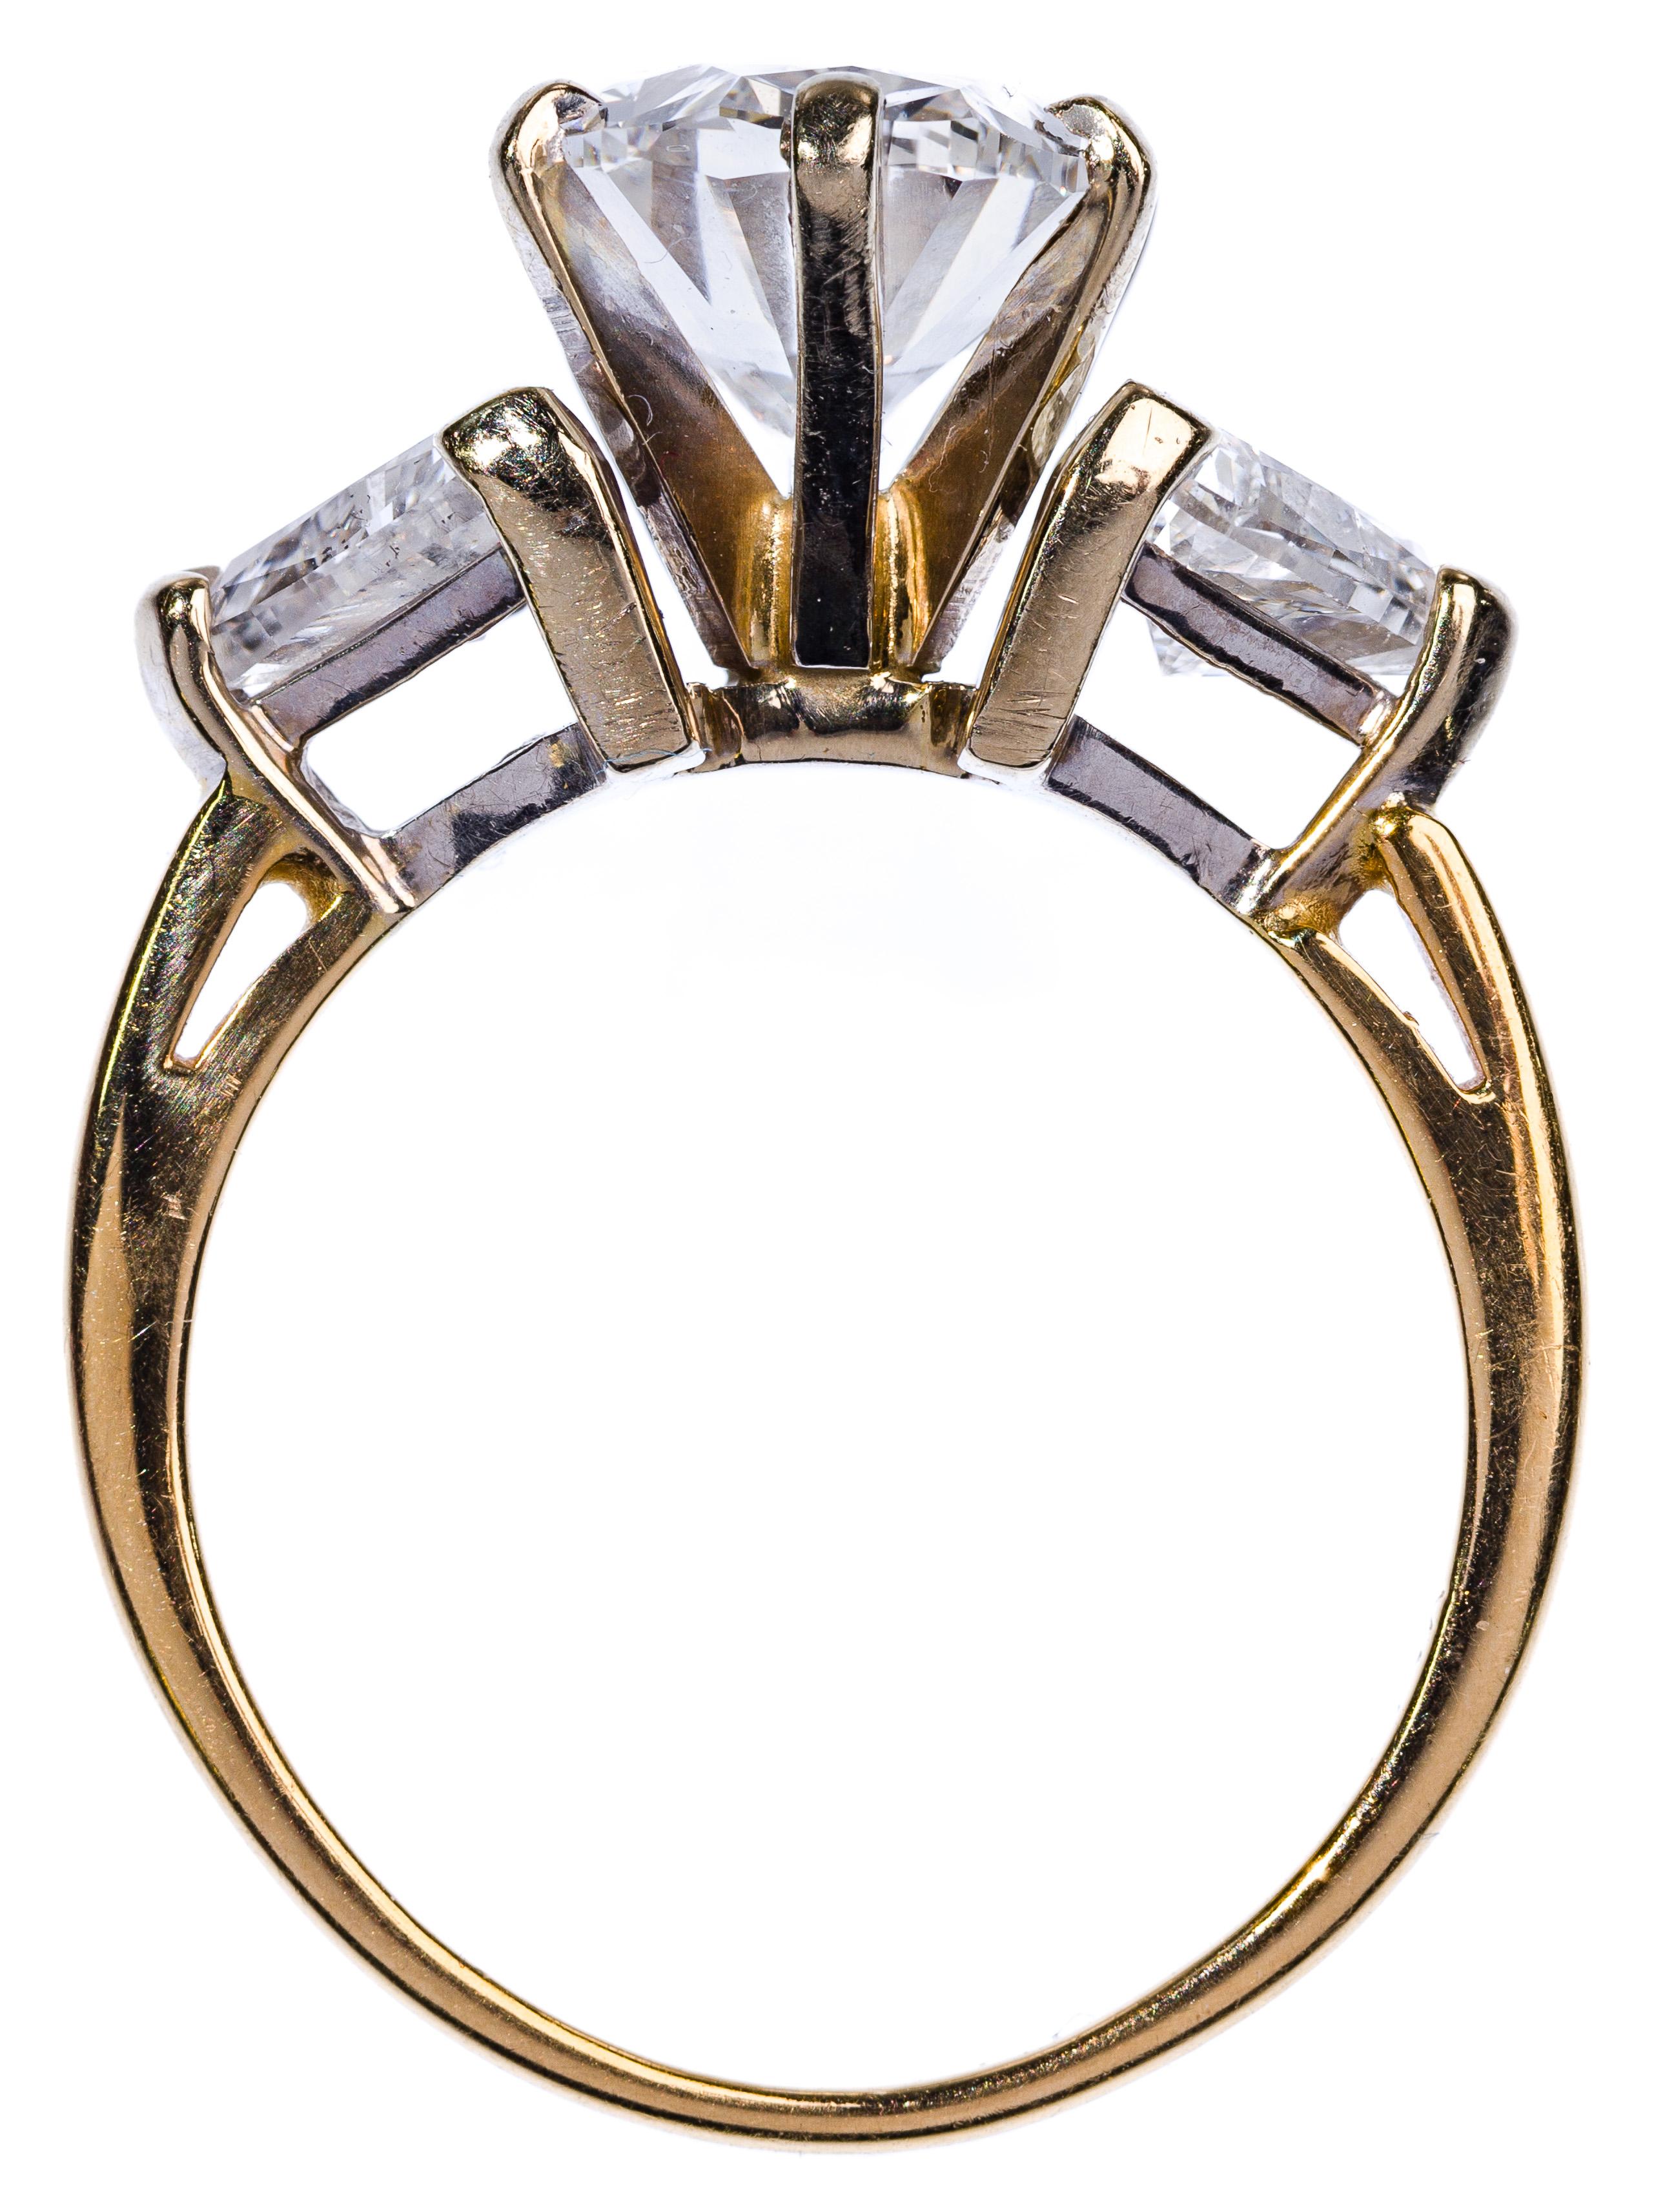 14k Yellow Gold and GIA 4-Carat, D, VS-2 Diamond Ring